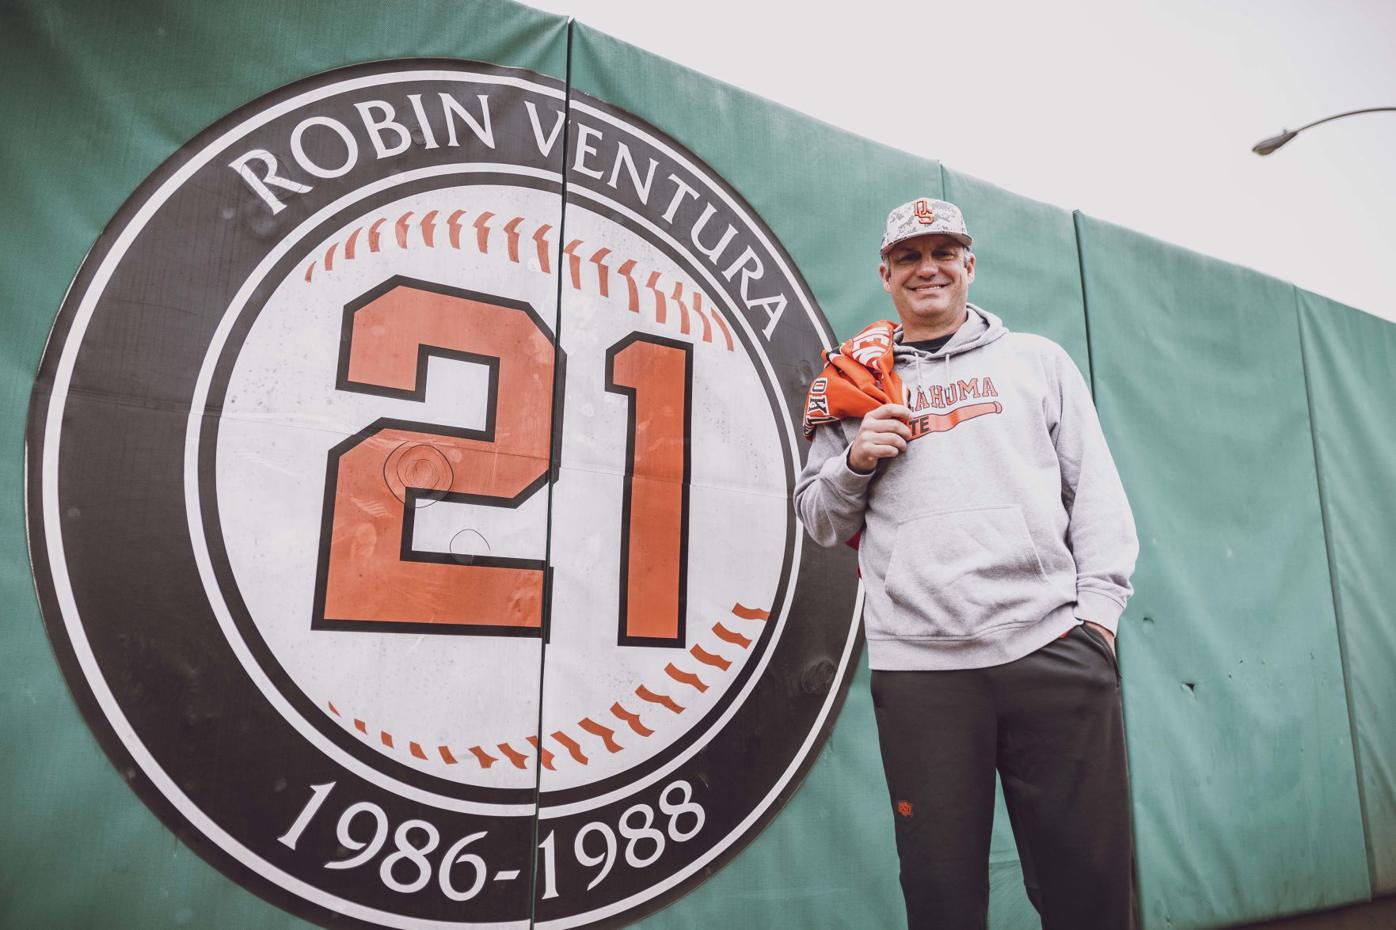 Cowboy legend Robin Ventura back in the college swing, Sports